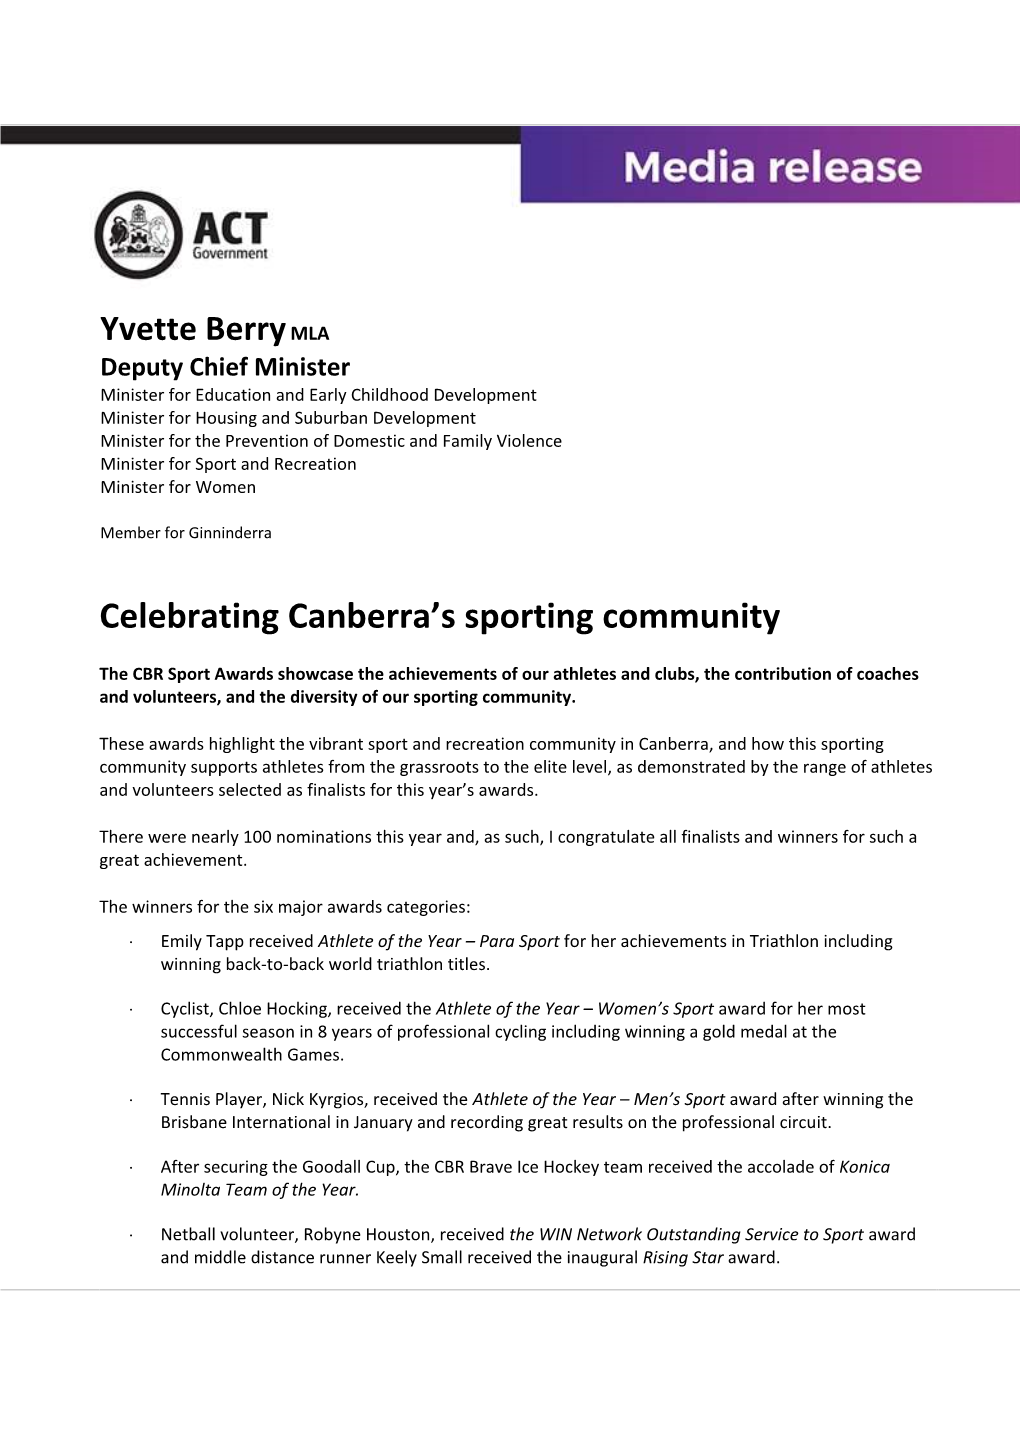 Celebrating Canberra's Sporting Community